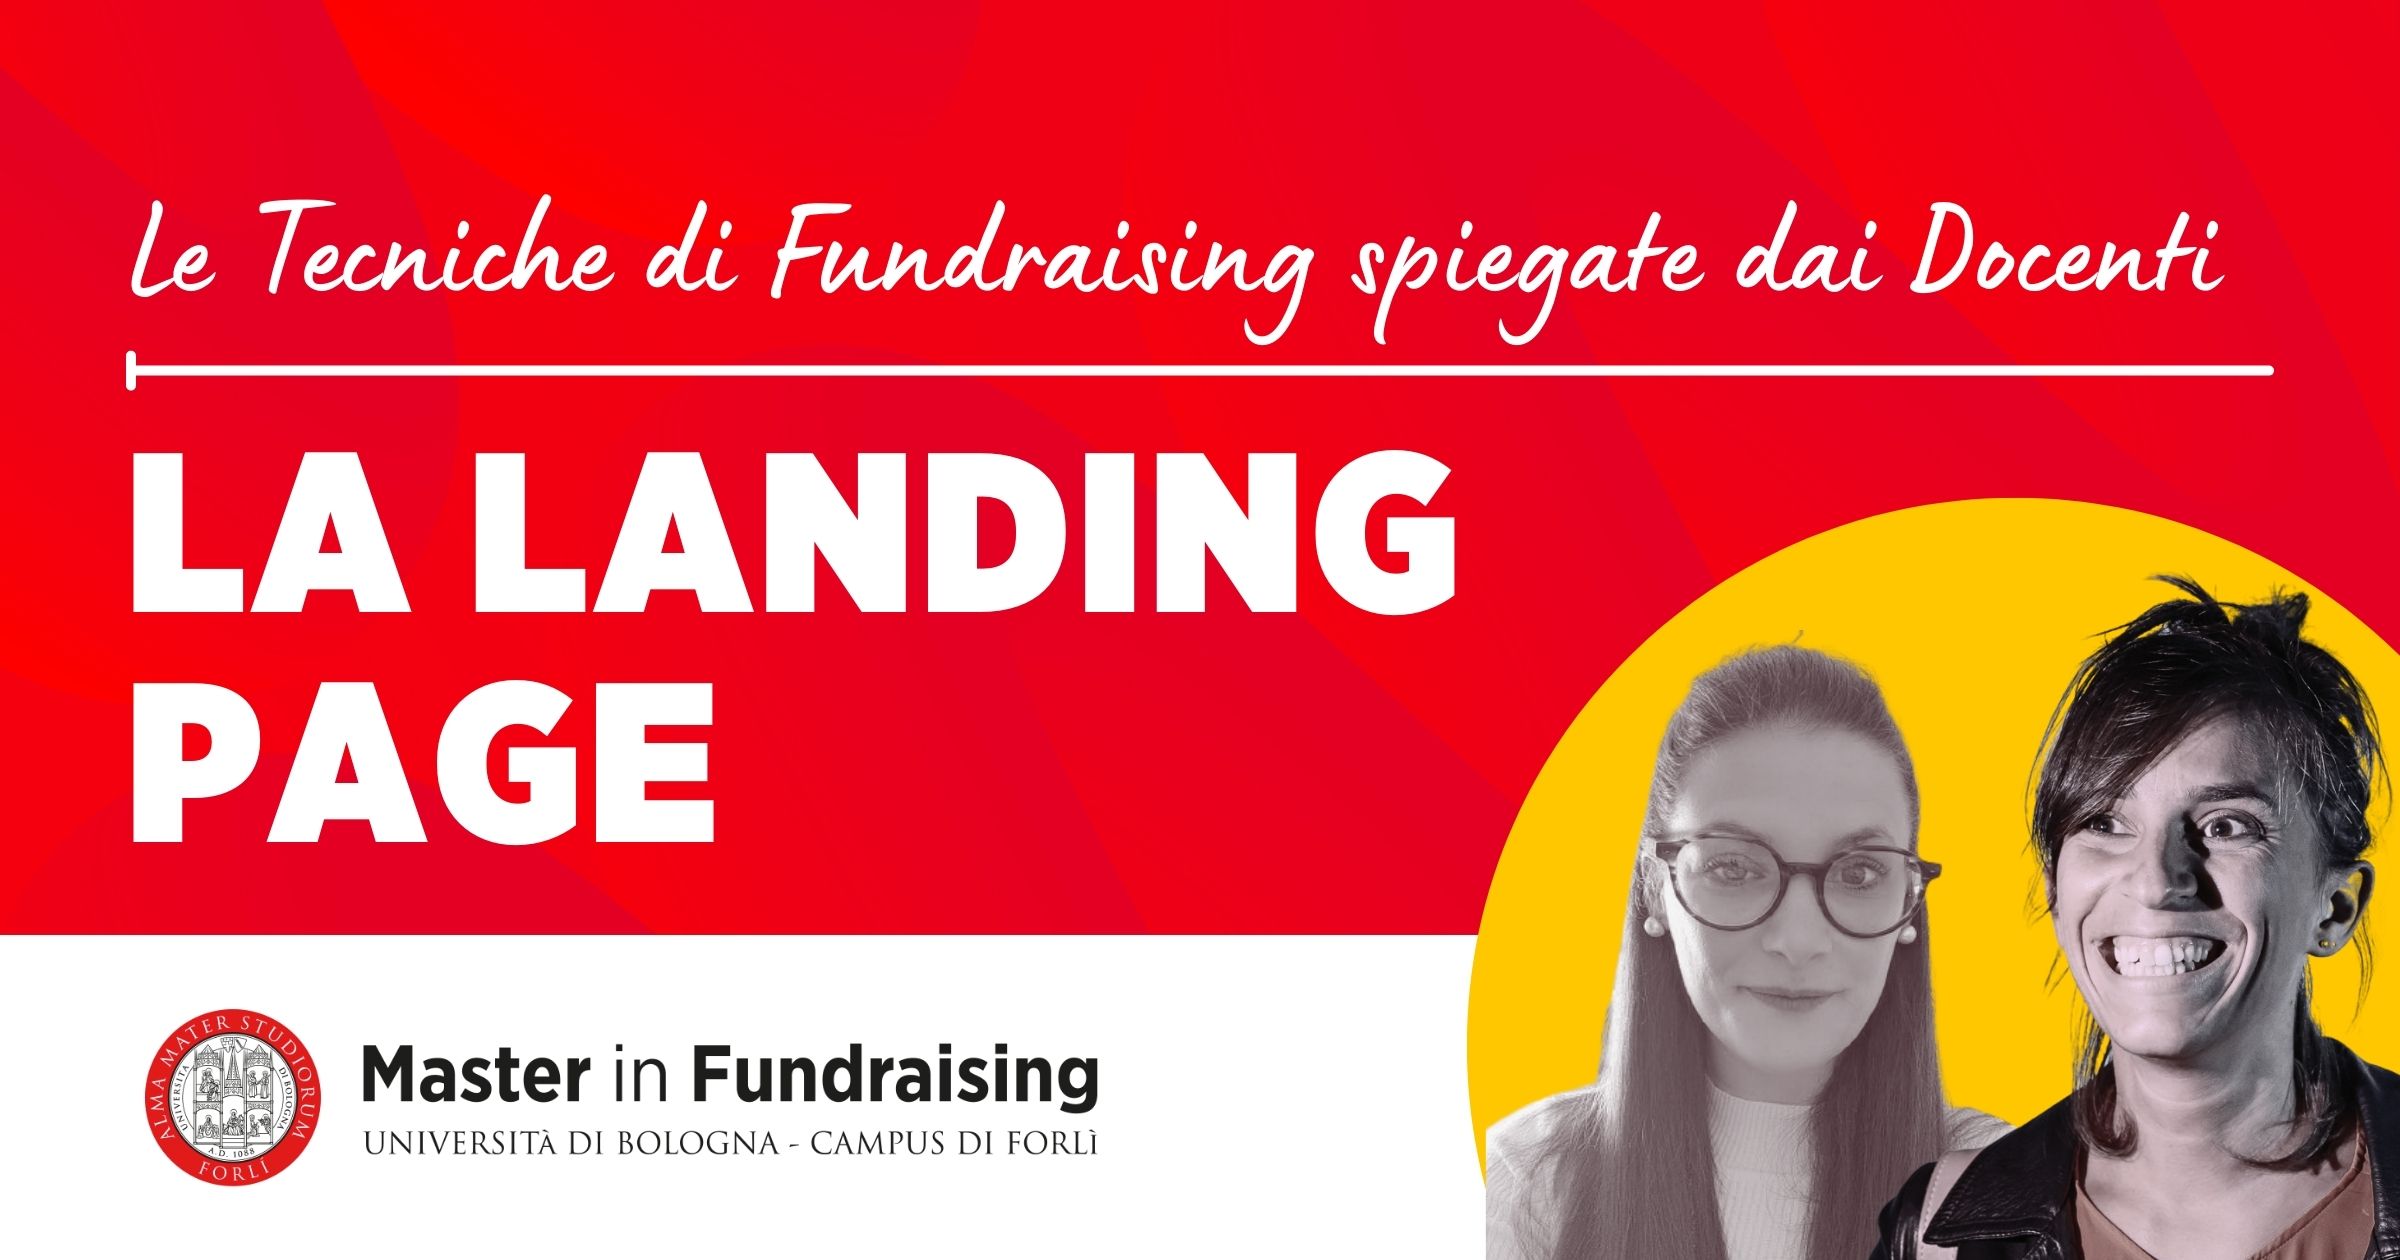 La Landing Page Fundraising.it